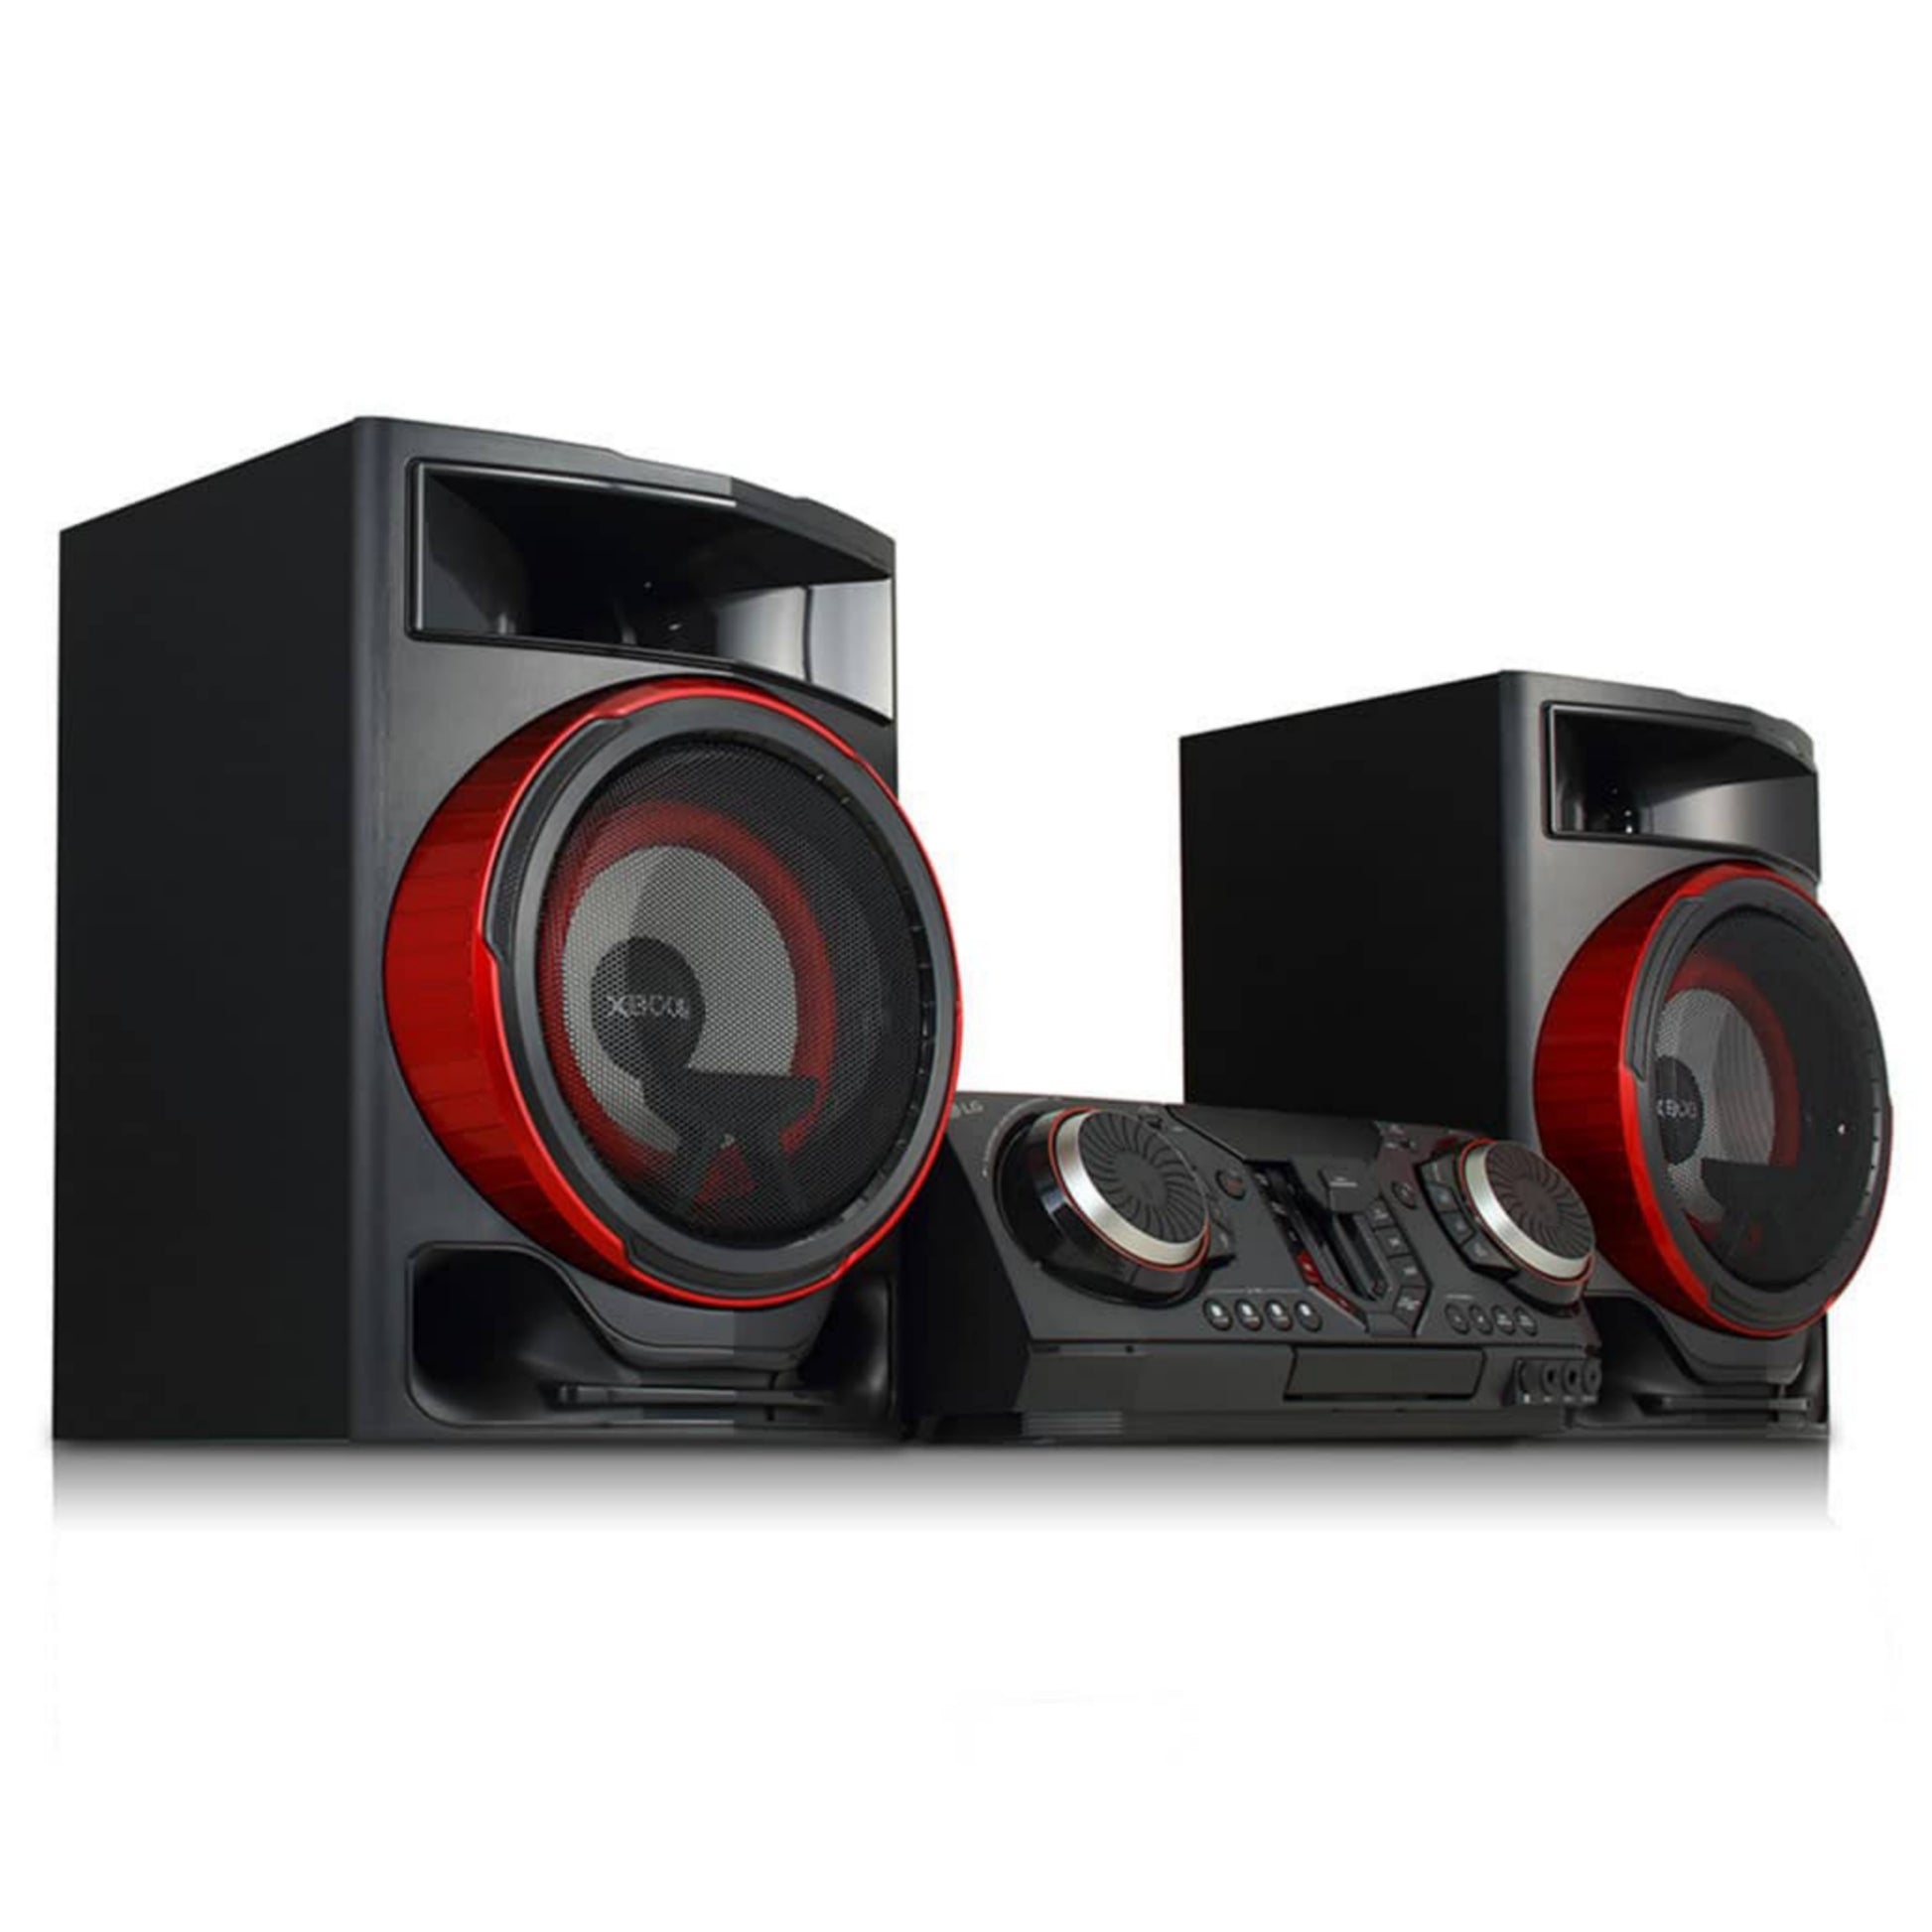 LG XBOOM CL87 2350W Mini CD, Multi Bluetooth, Multi Karaoke Home Theater Closer speaker view - Brand New